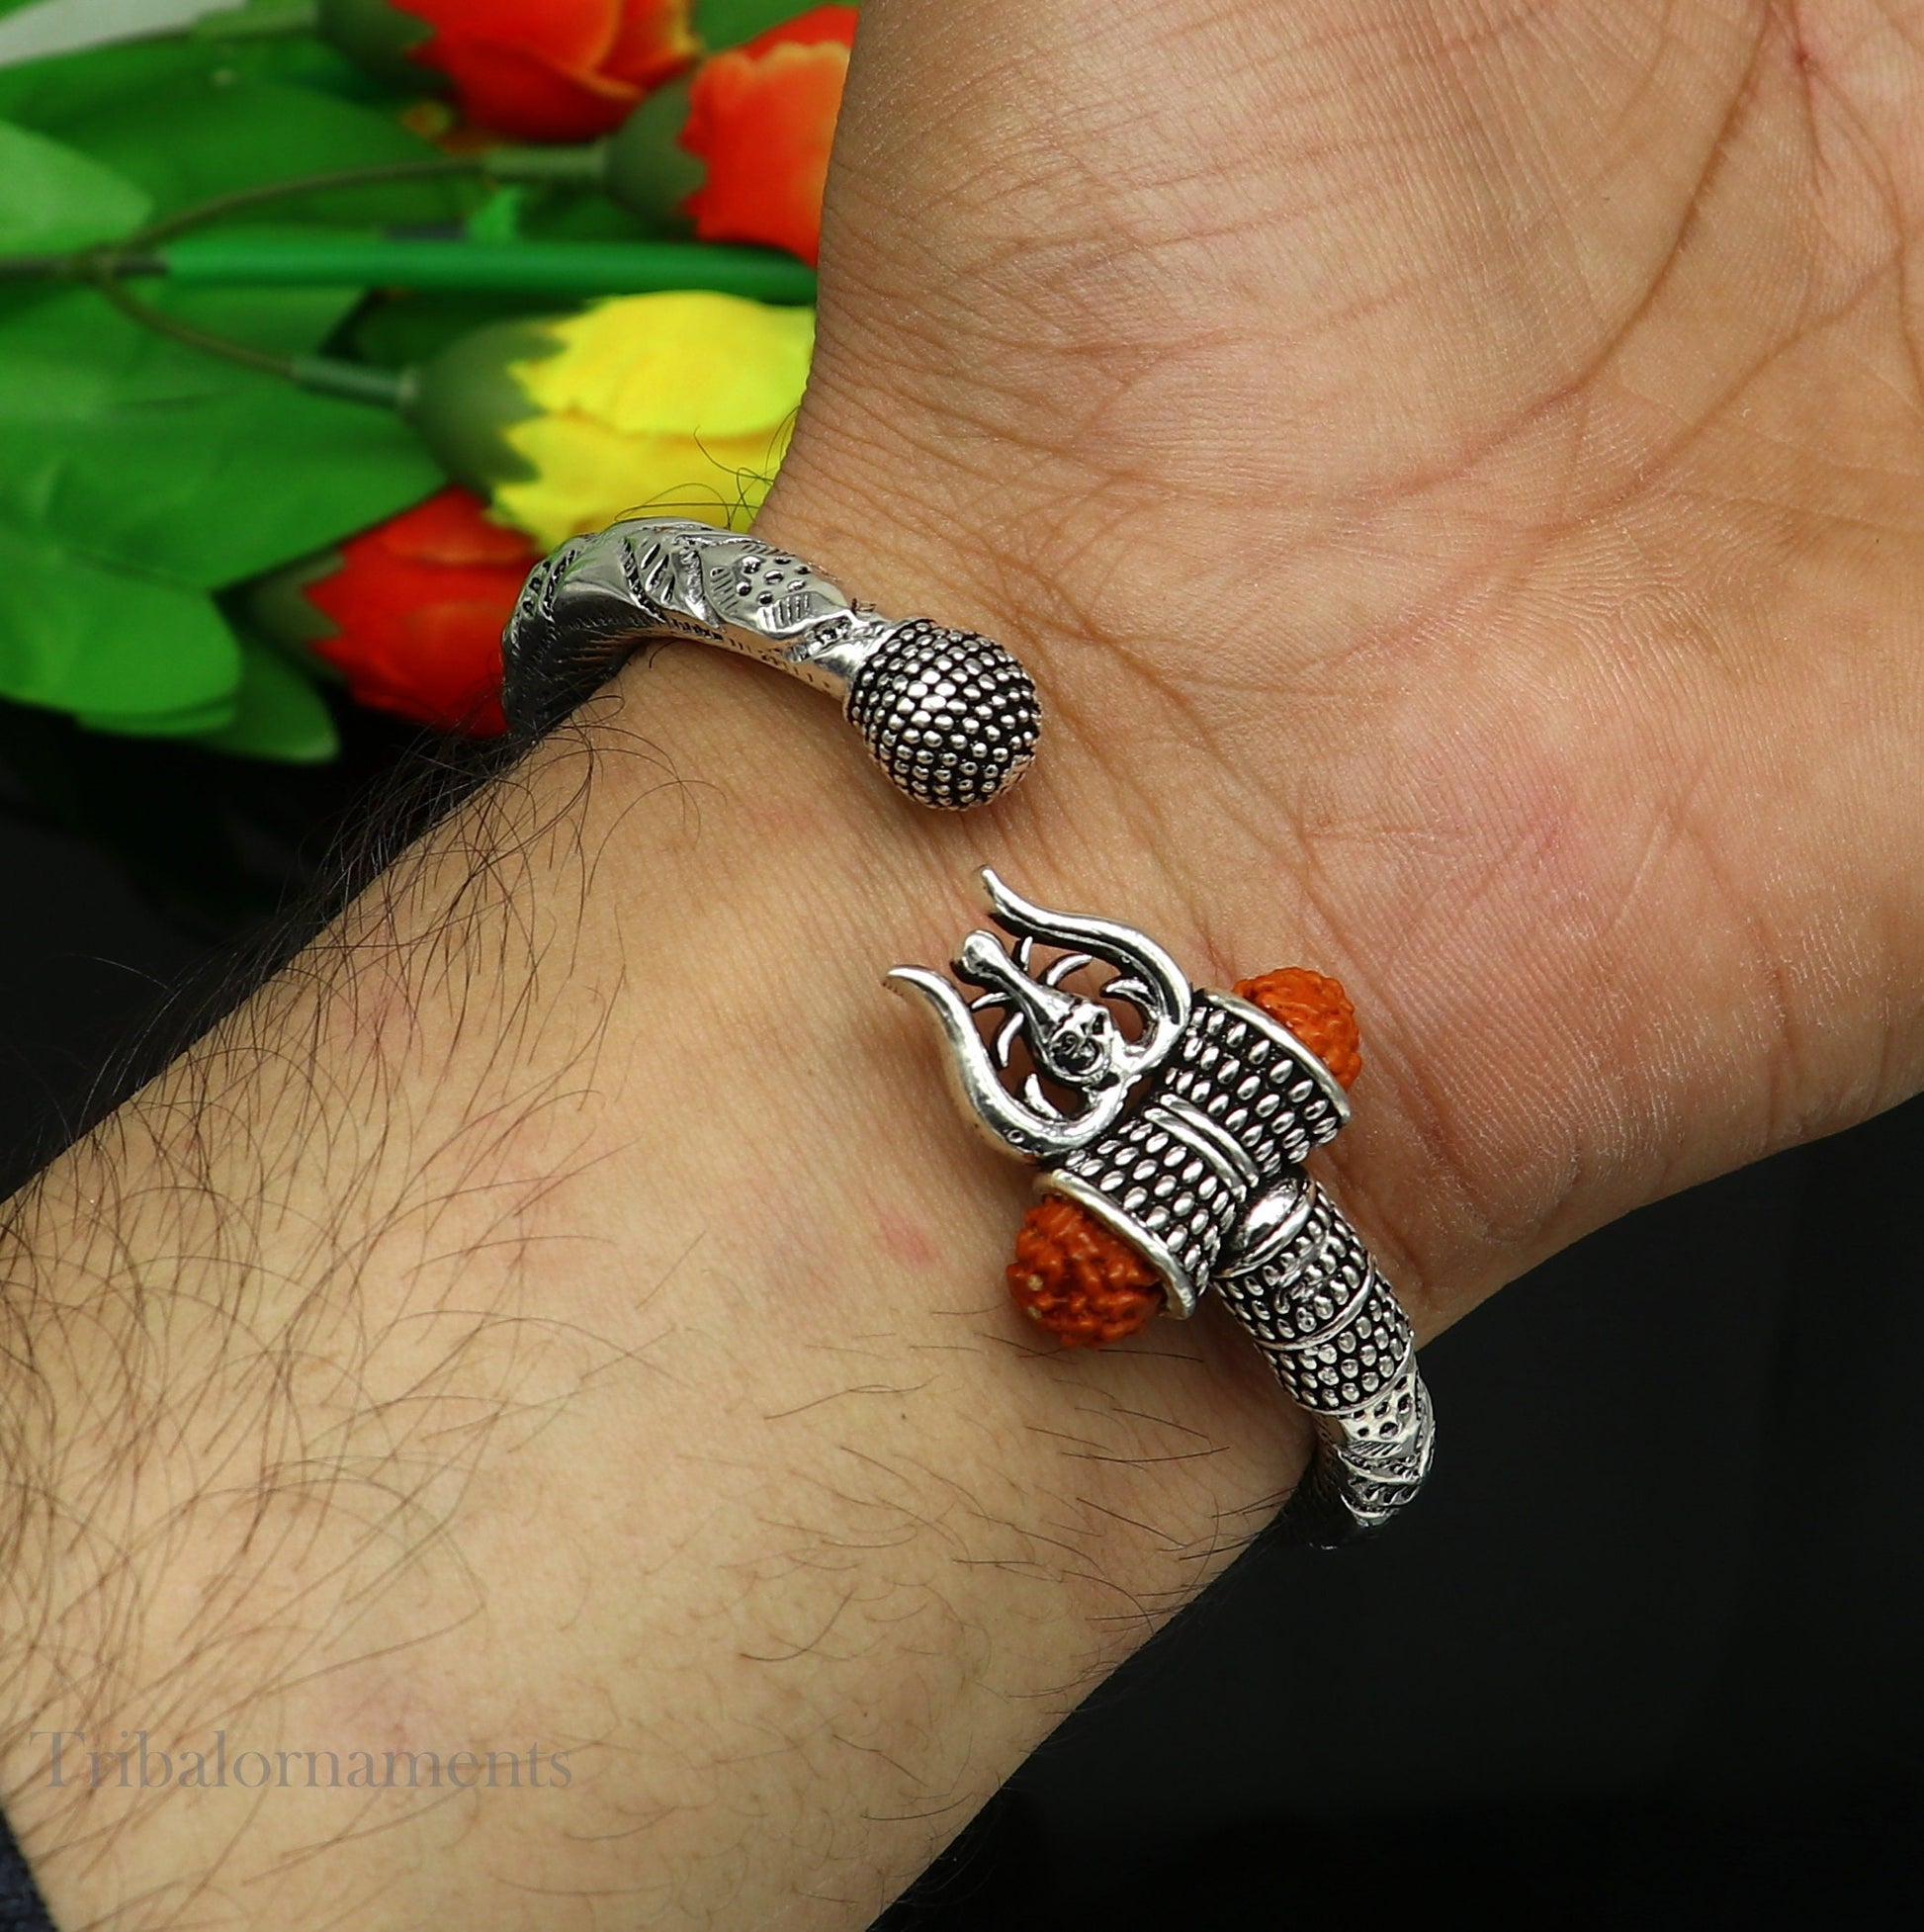 Lord Shiva trident trishul trishool kada 925 Sterling silver handmade bangle bracelet with natural Rudraksha magical Bahubali kada nsk384 - TRIBAL ORNAMENTS